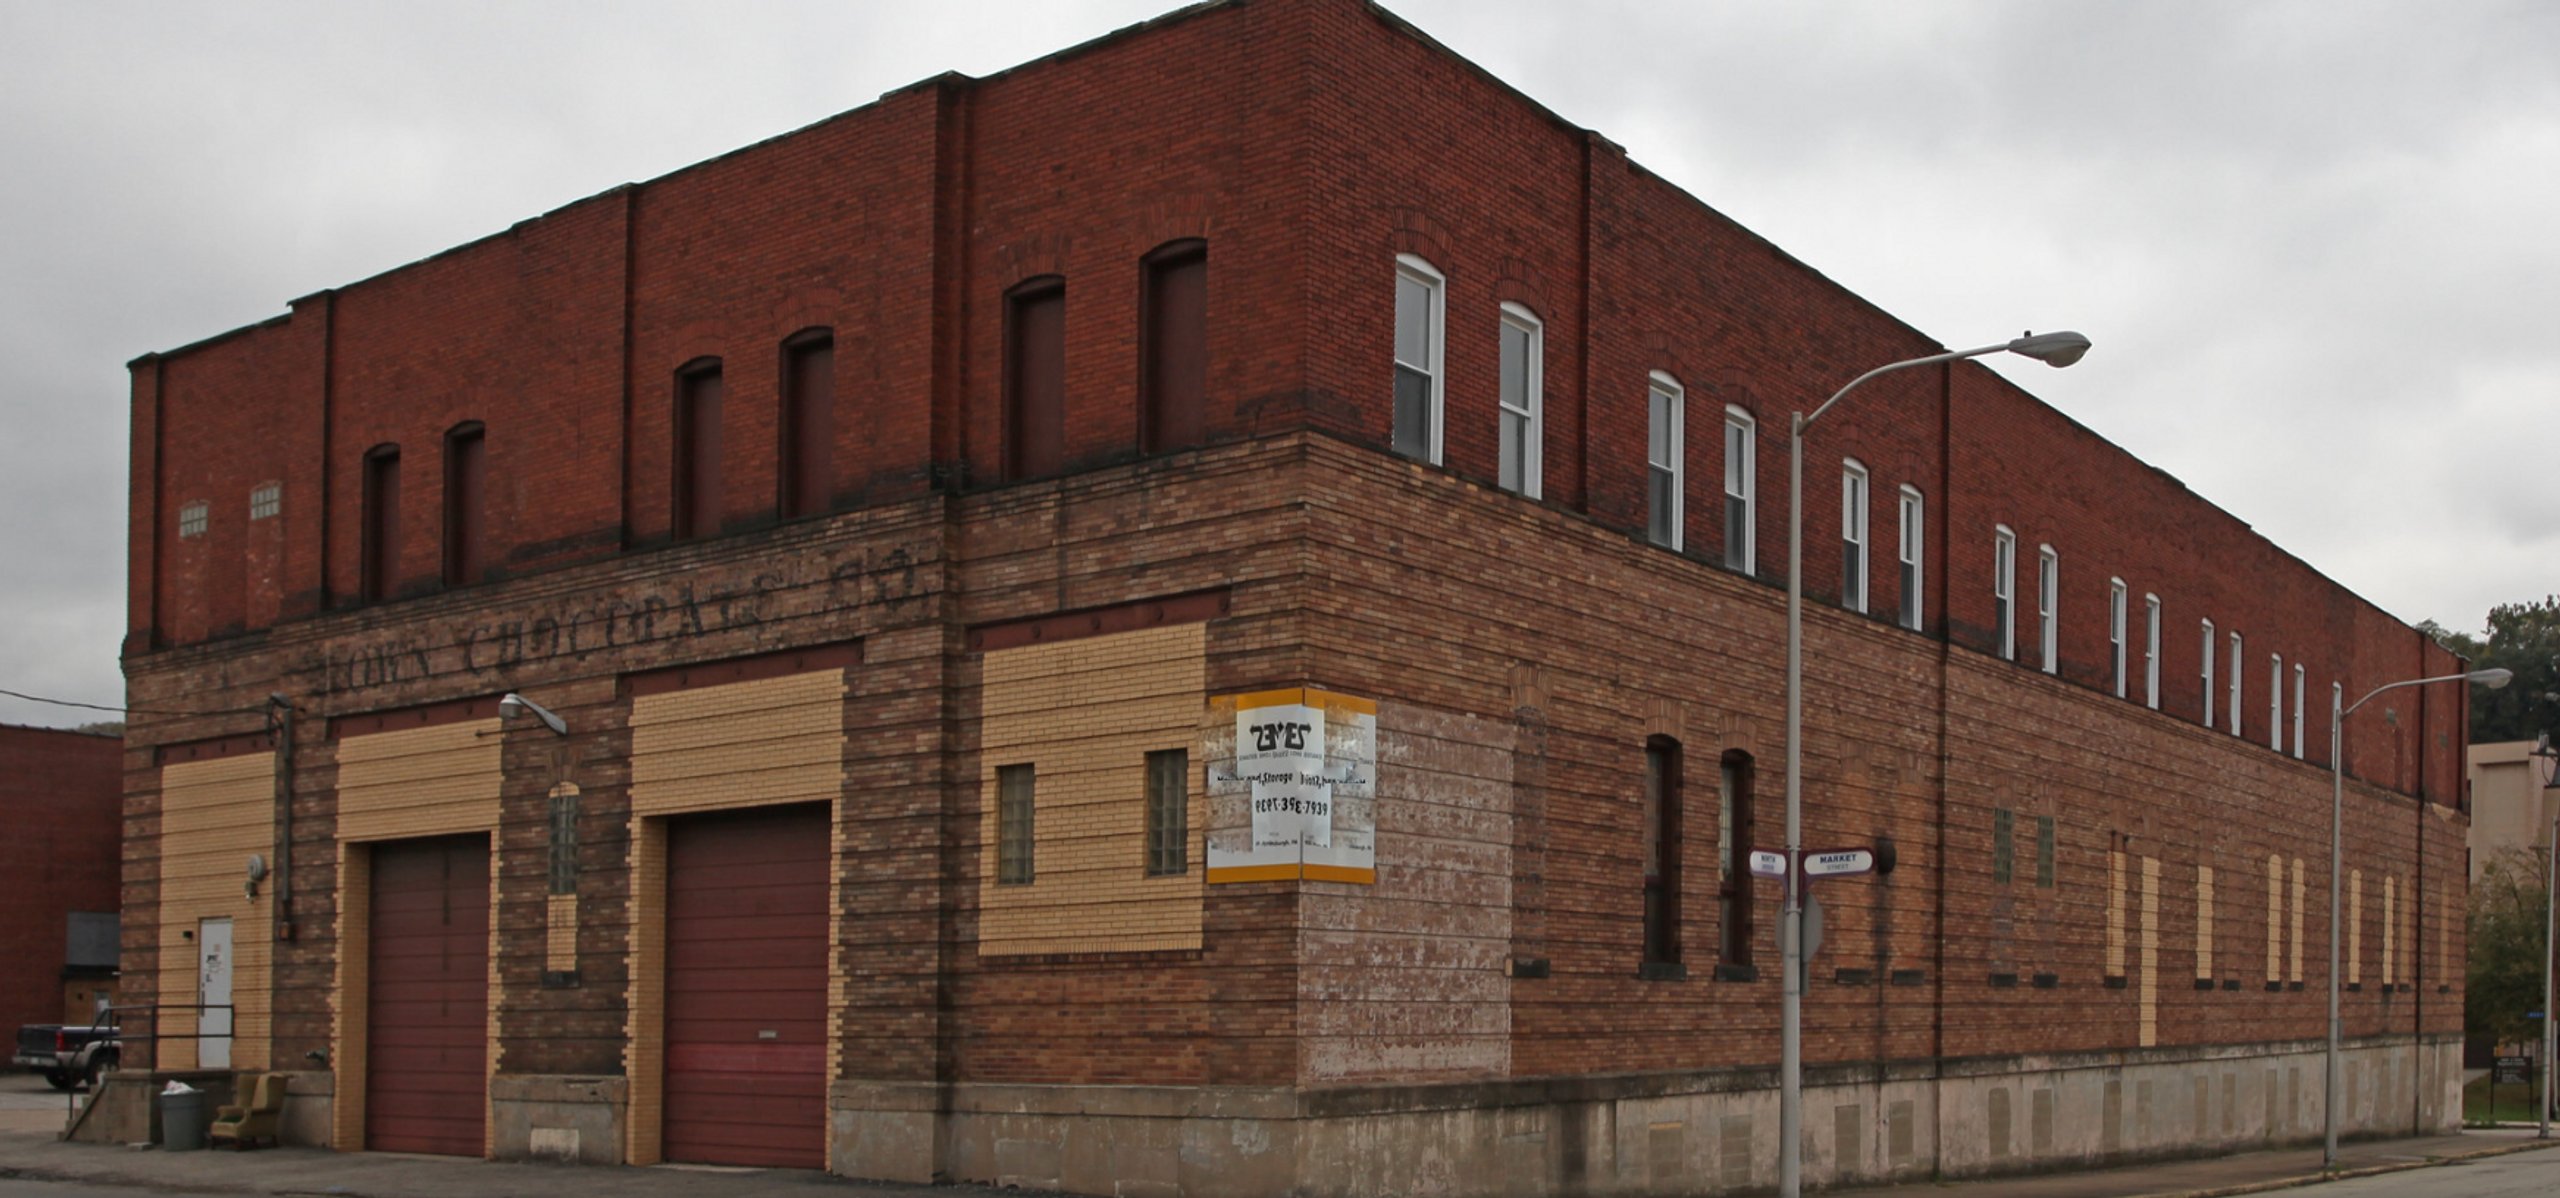 20x20 Warehouse self storage unit in McKeesport, PA